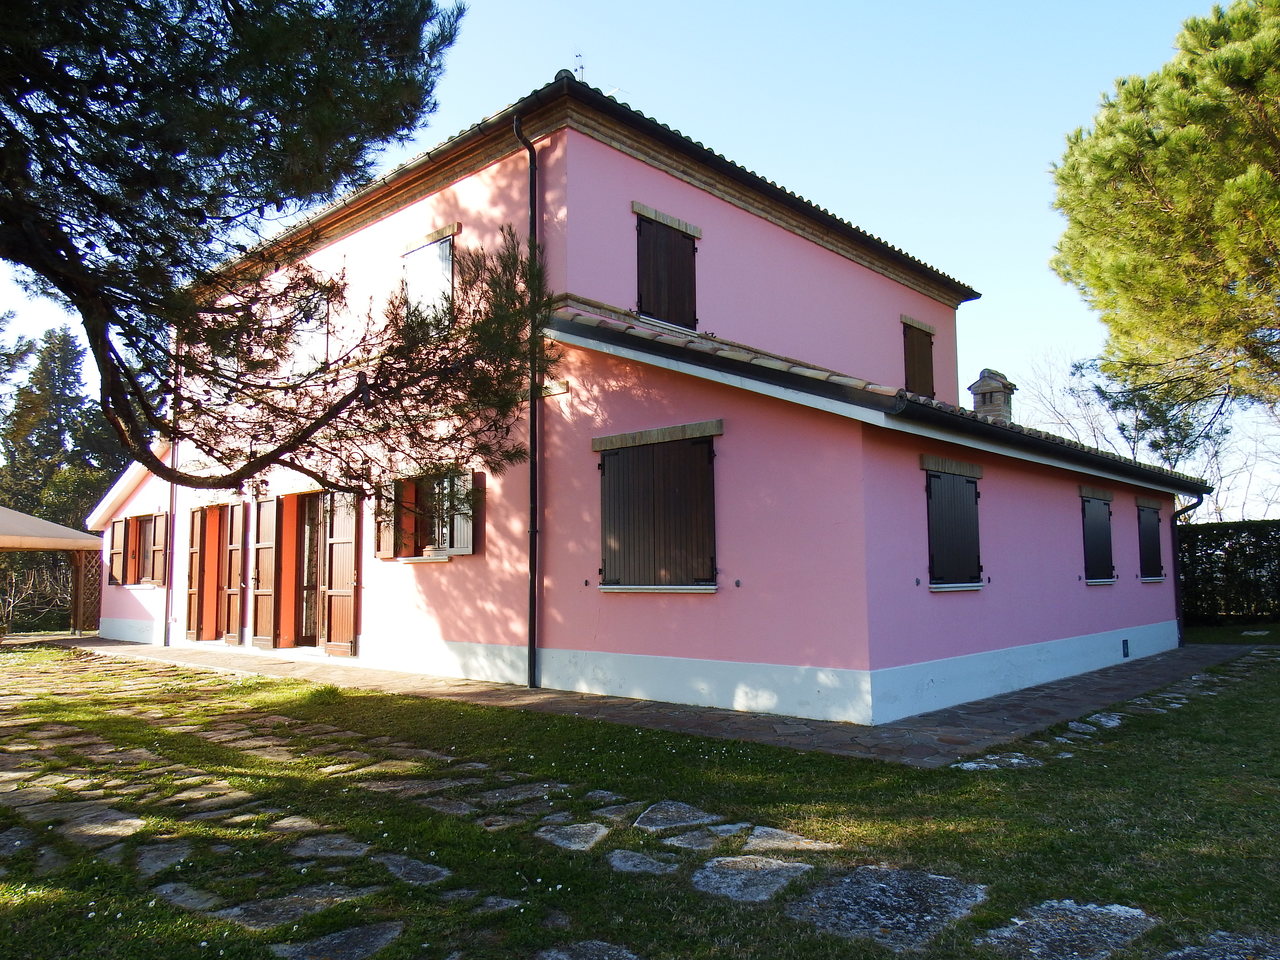 For sale cottage in quiet zone Senigallia Marche